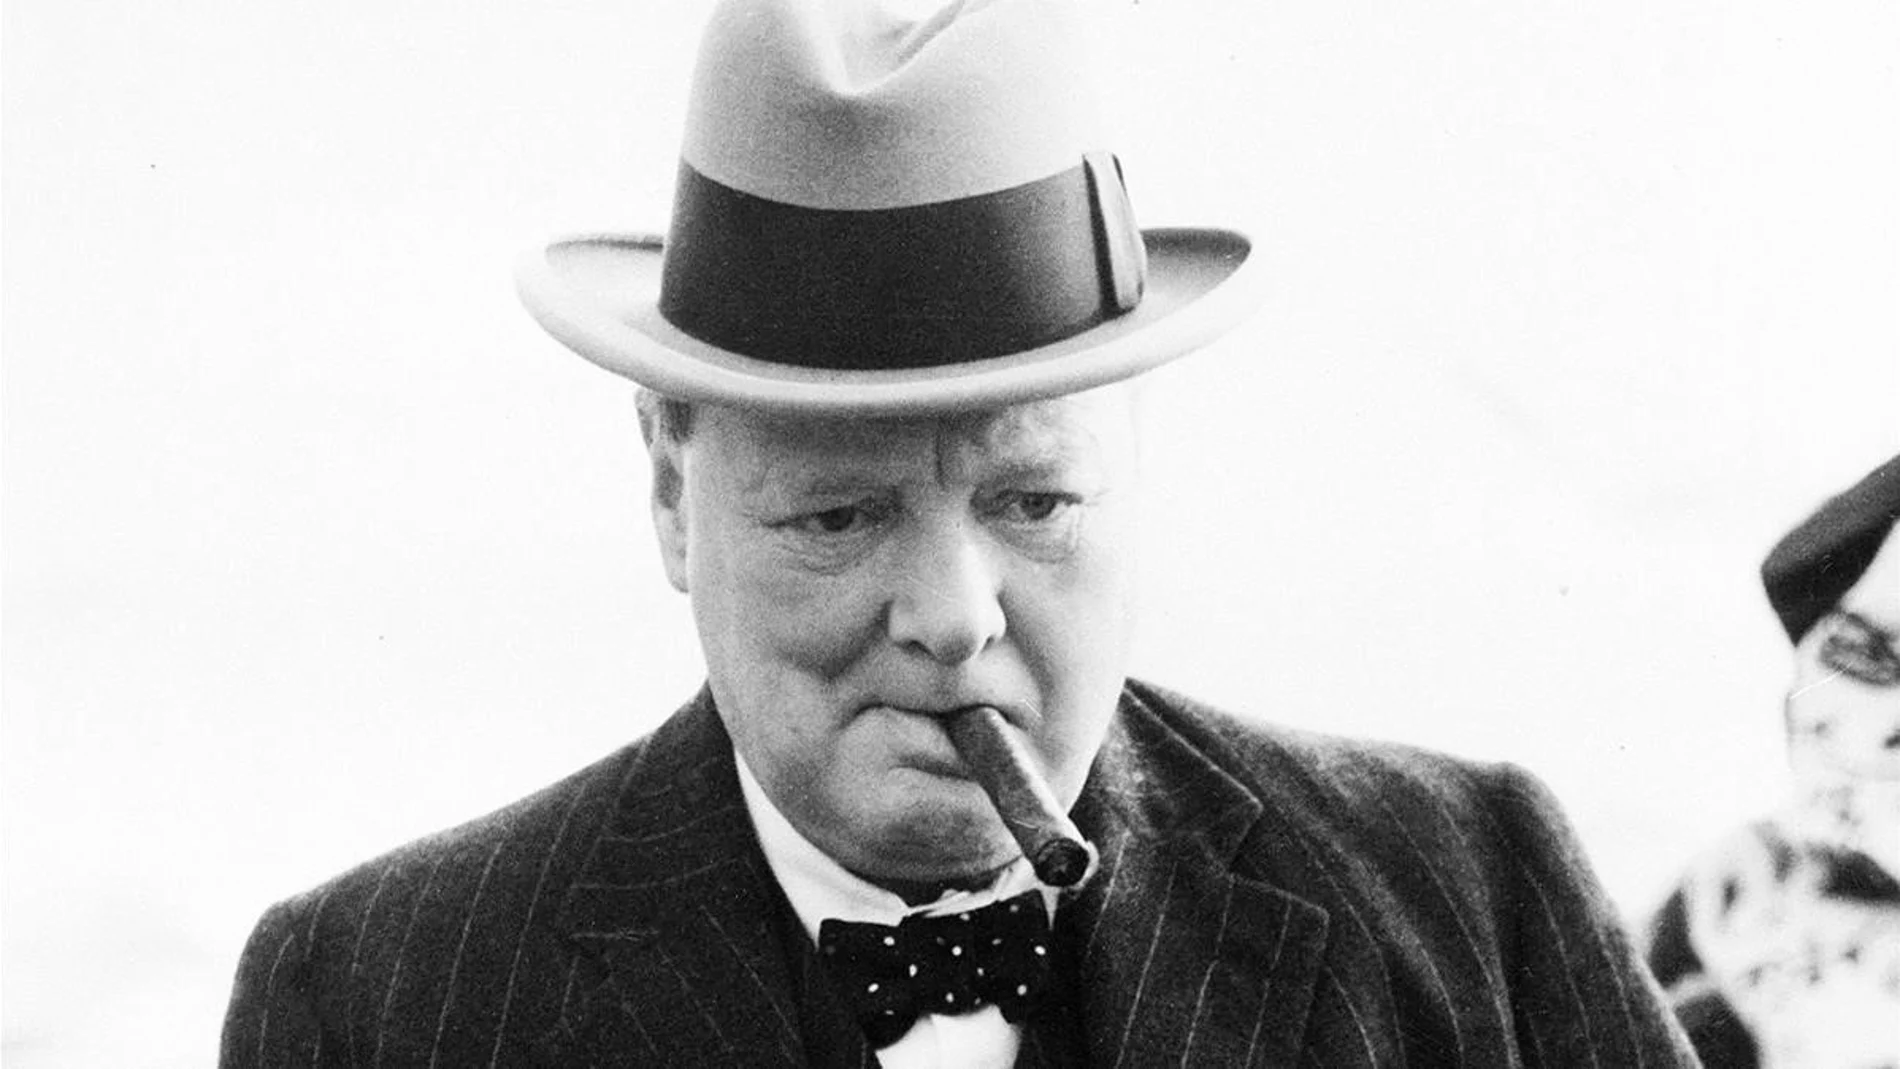 El político británico Winston Churchill